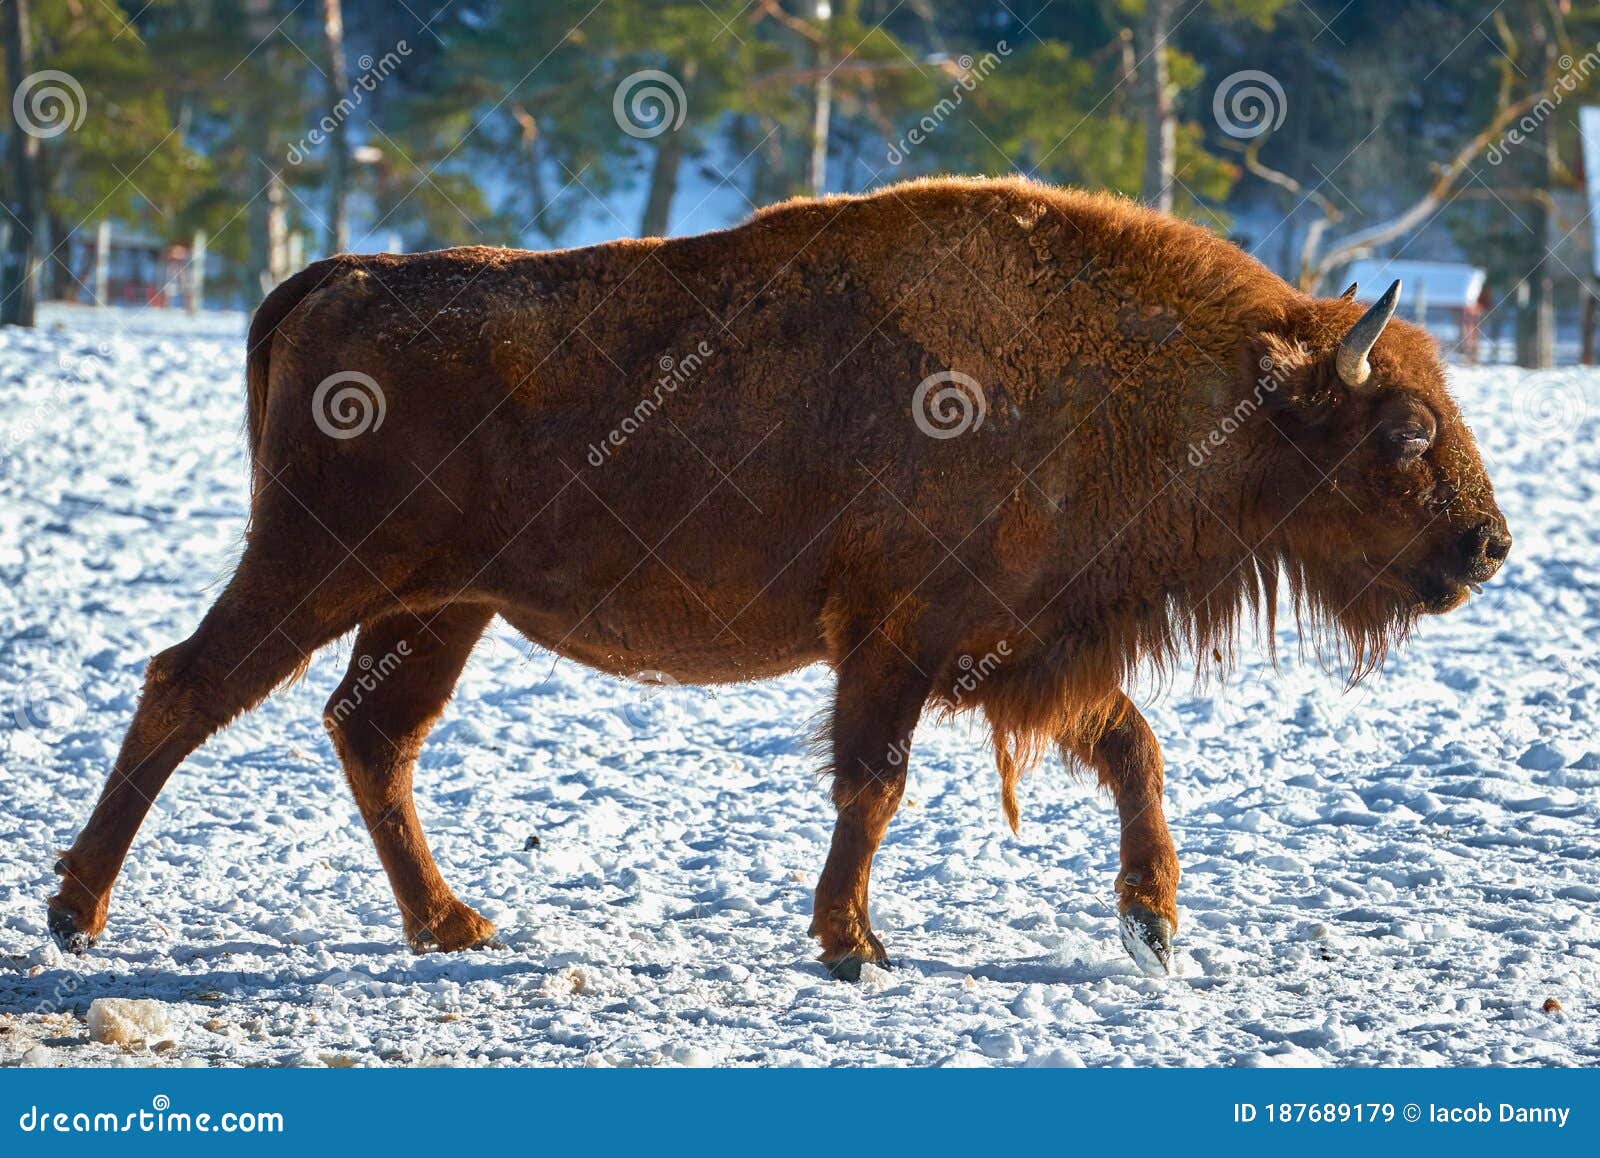 european bison, wisent, european wood bison, herbivore in winter, bison bonasus, romania, europe